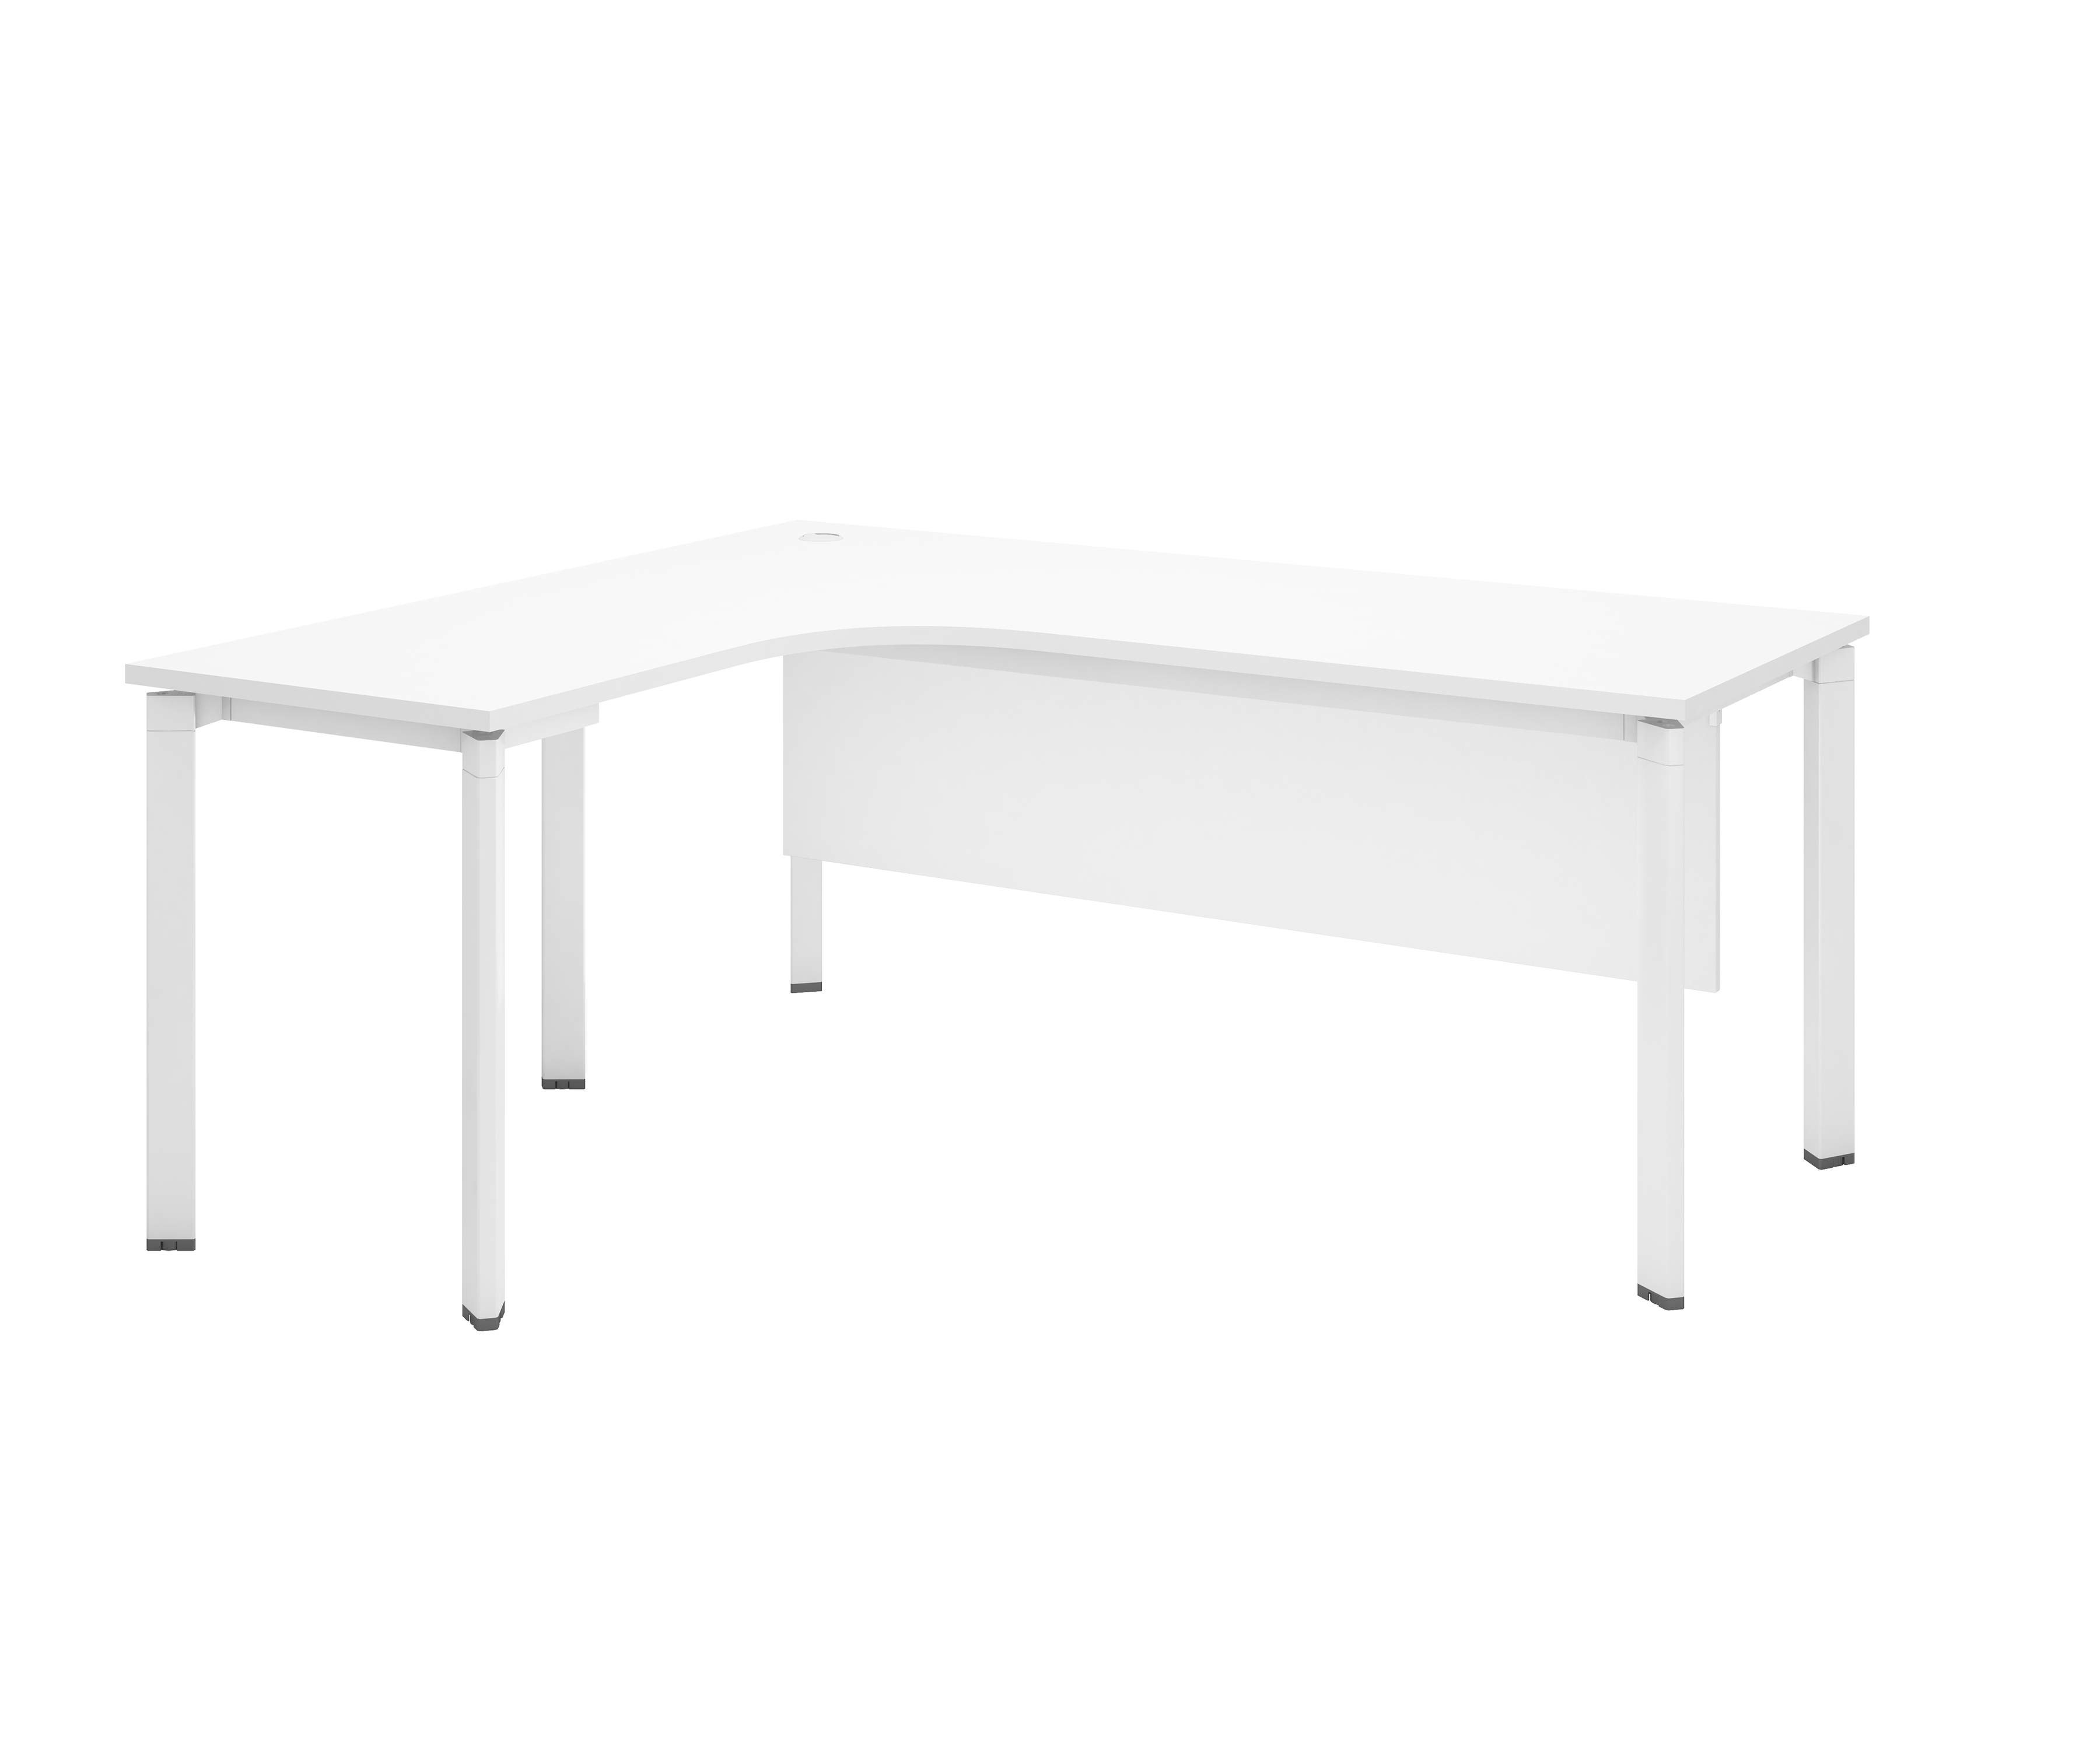 L Shape Writing Table (Metal Leg) Model : KT-UTWL1815(L) office furniture malaysia kuala lumpur shah alam klang valley